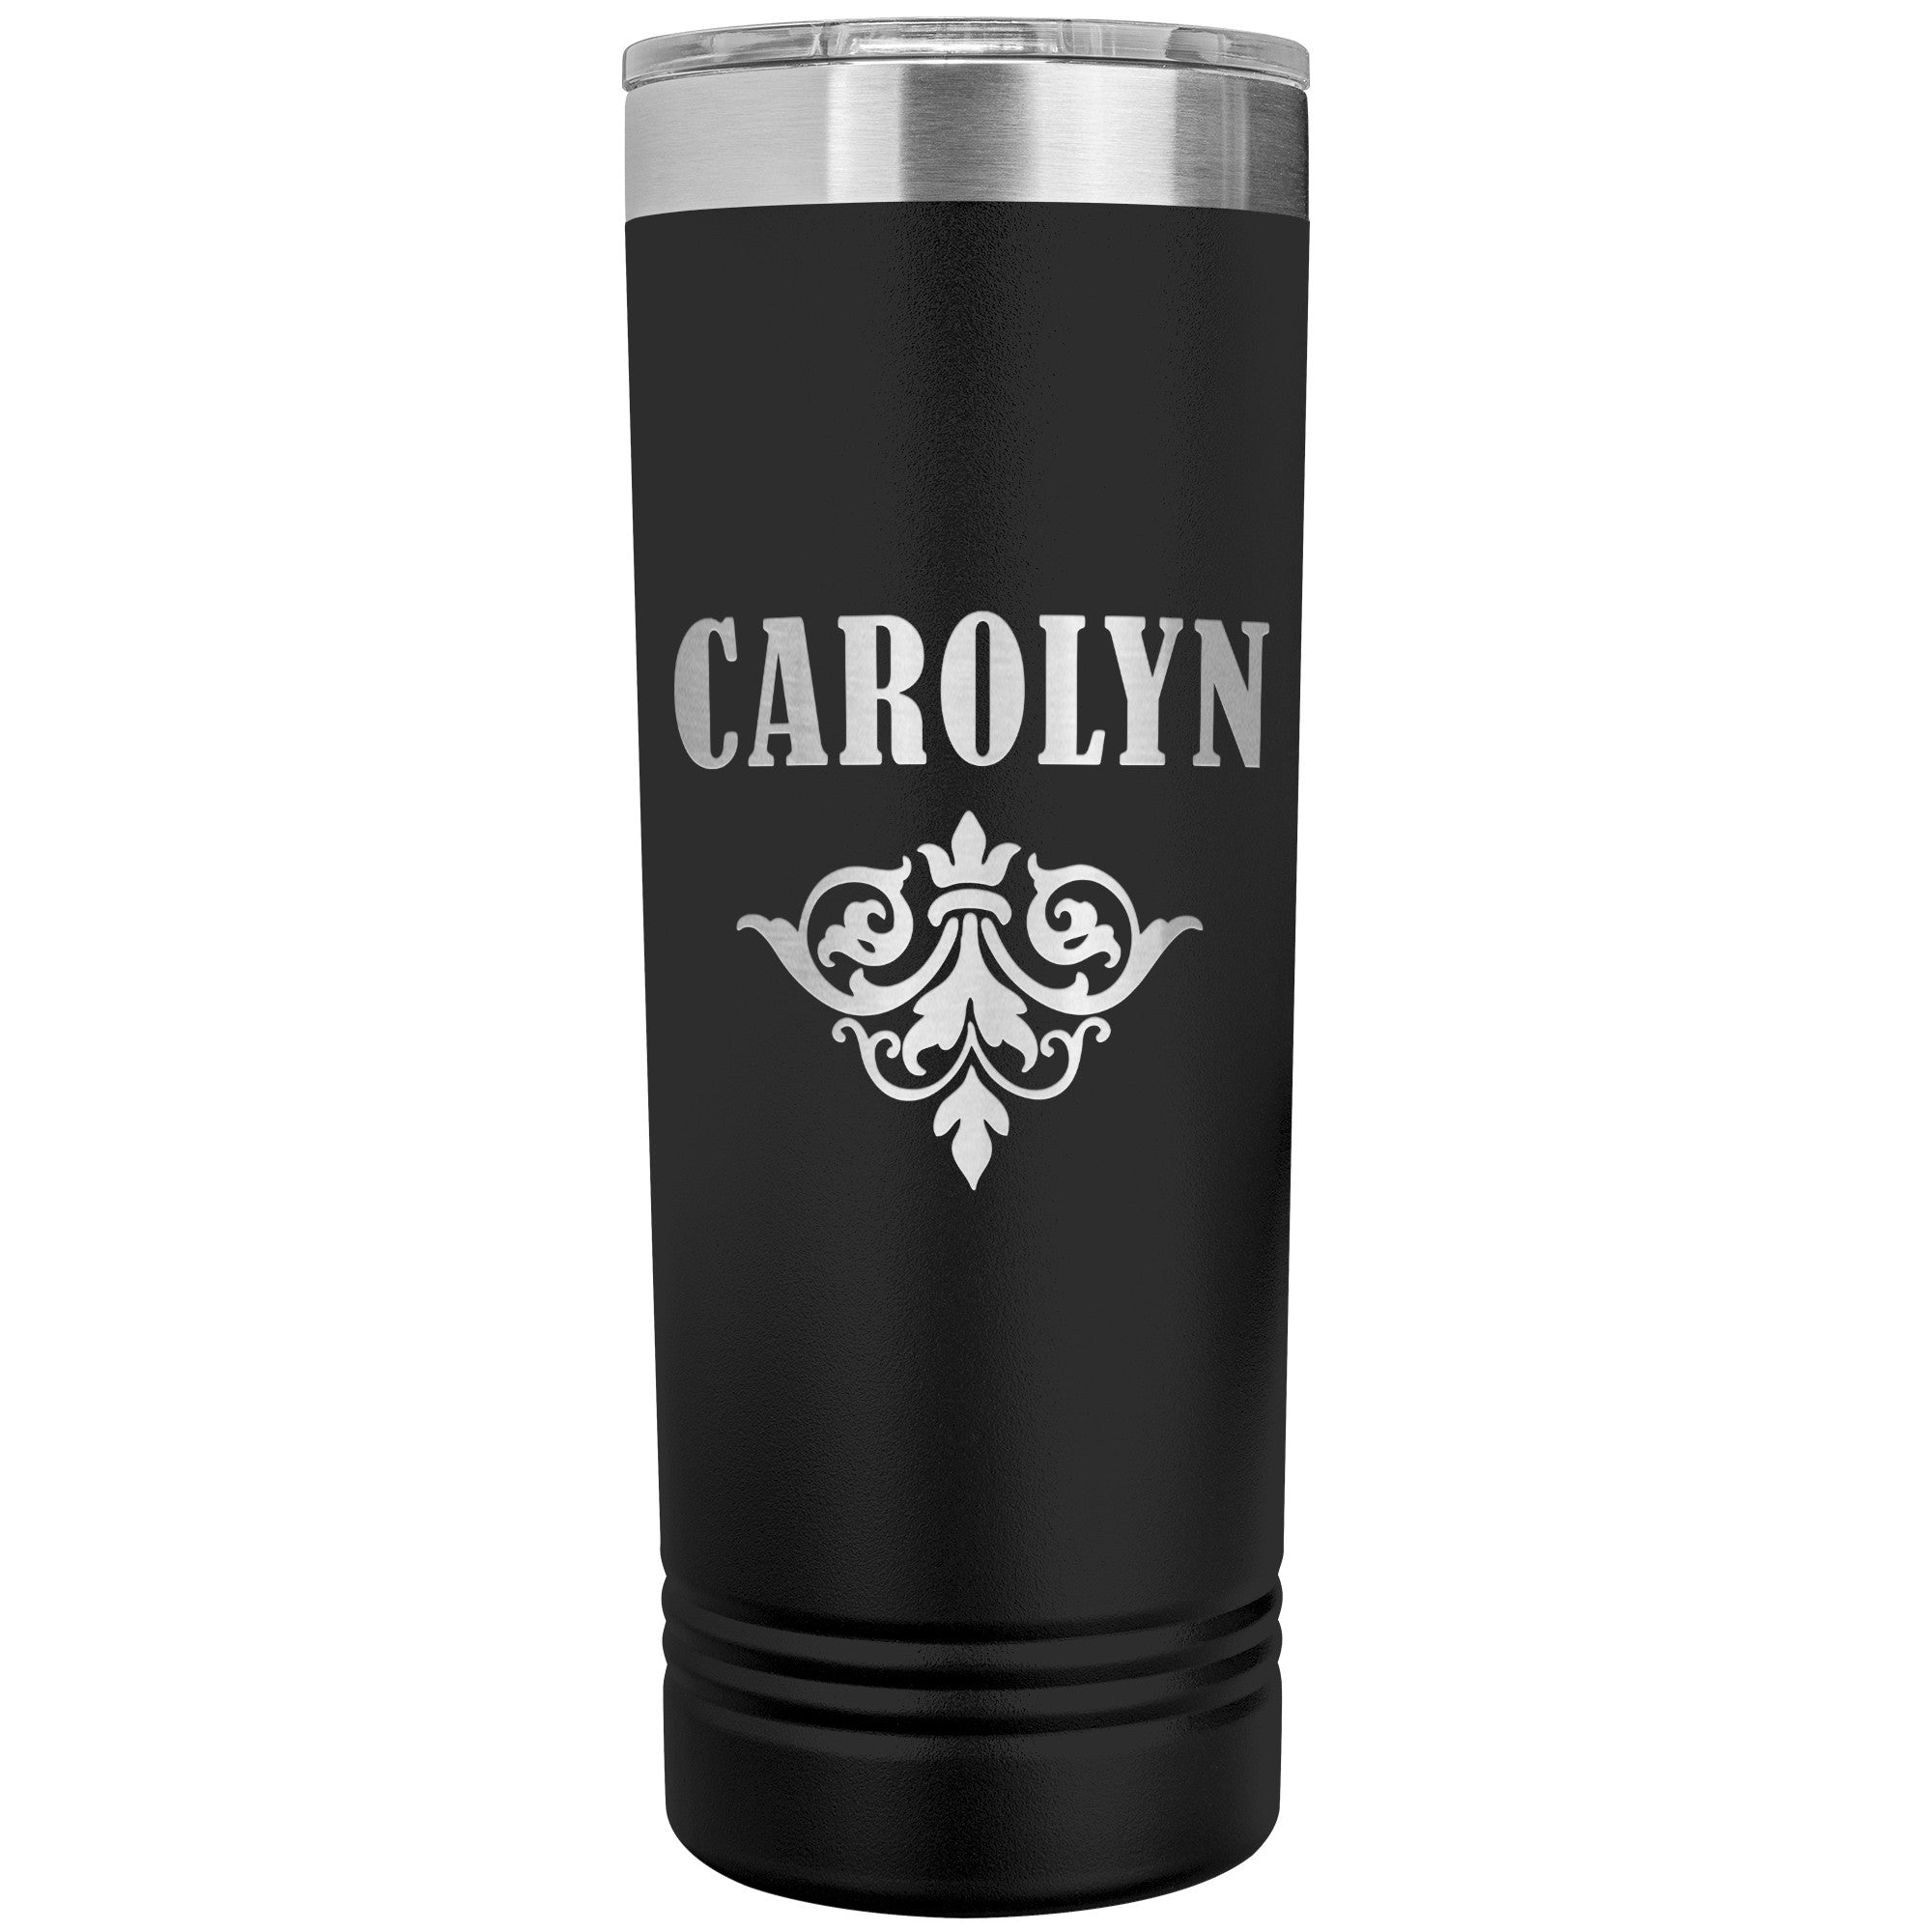 Carolyn v01 - 22oz Insulated Skinny Tumbler